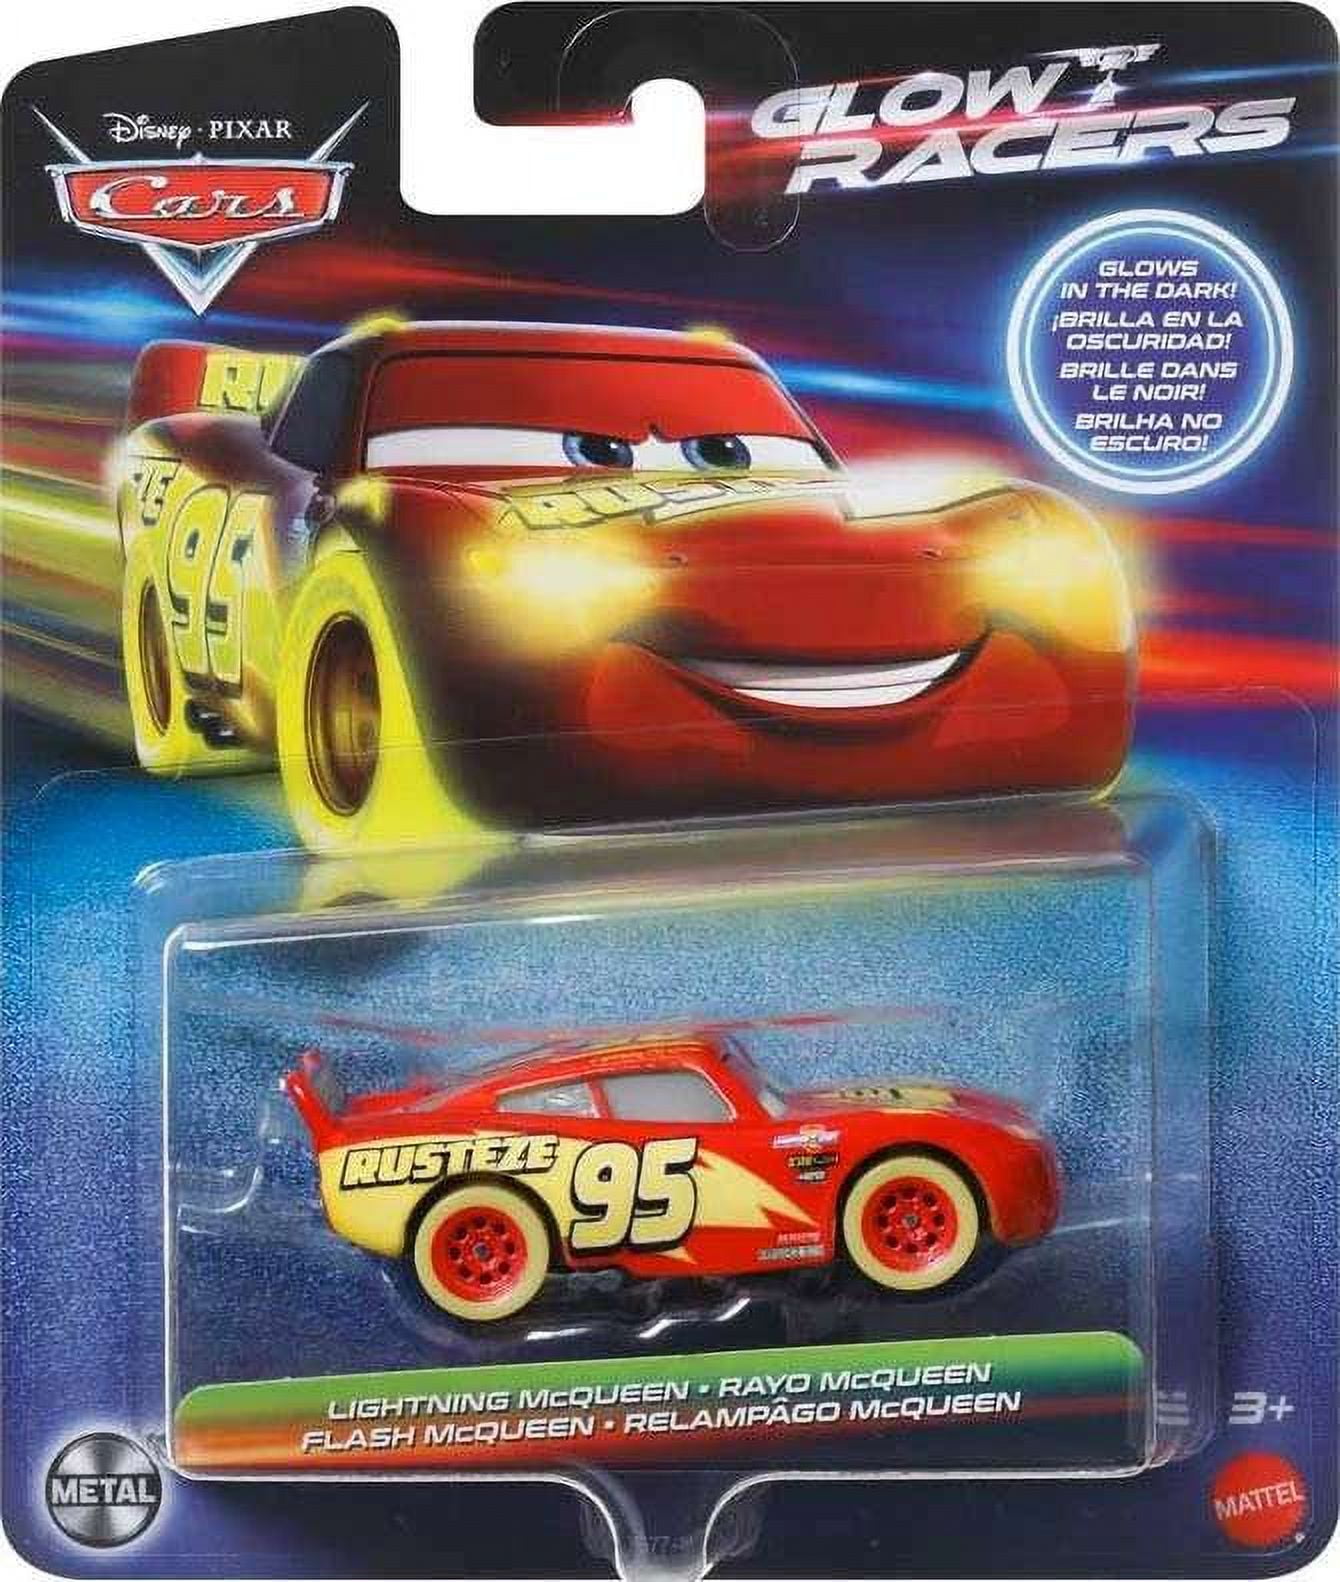  Disney Pixar Cars Original Lightning McQueen Diecast Vehicle :  Toys & Games